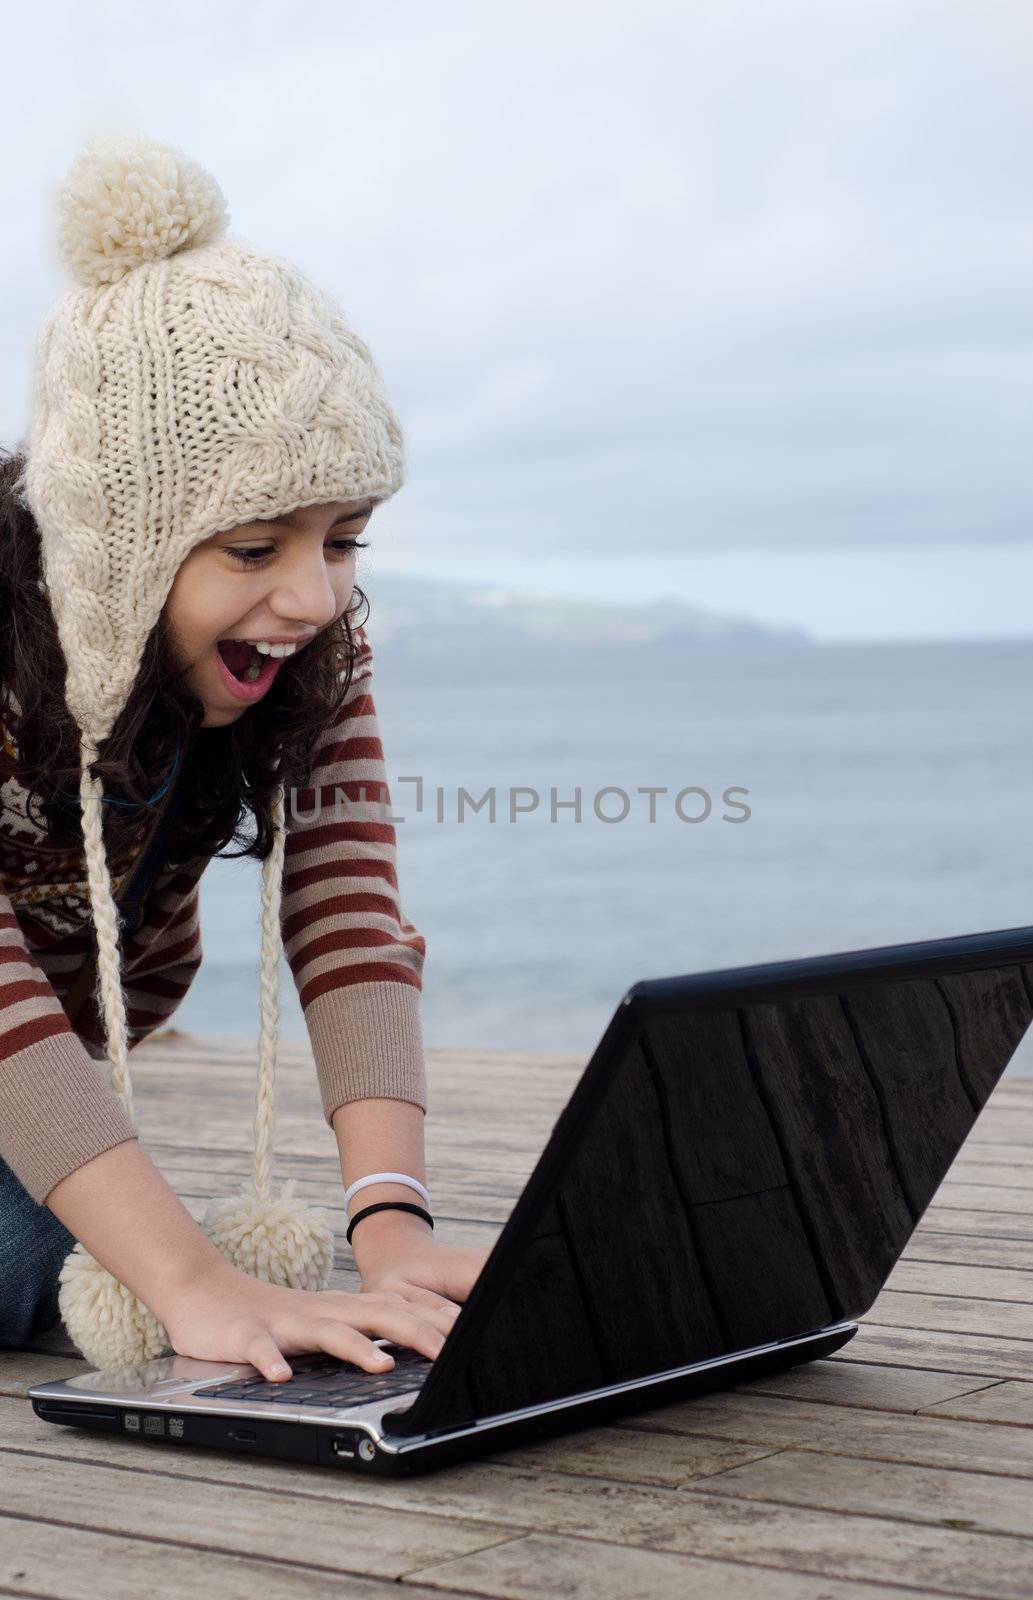 Having fun using the laptop close to the beach